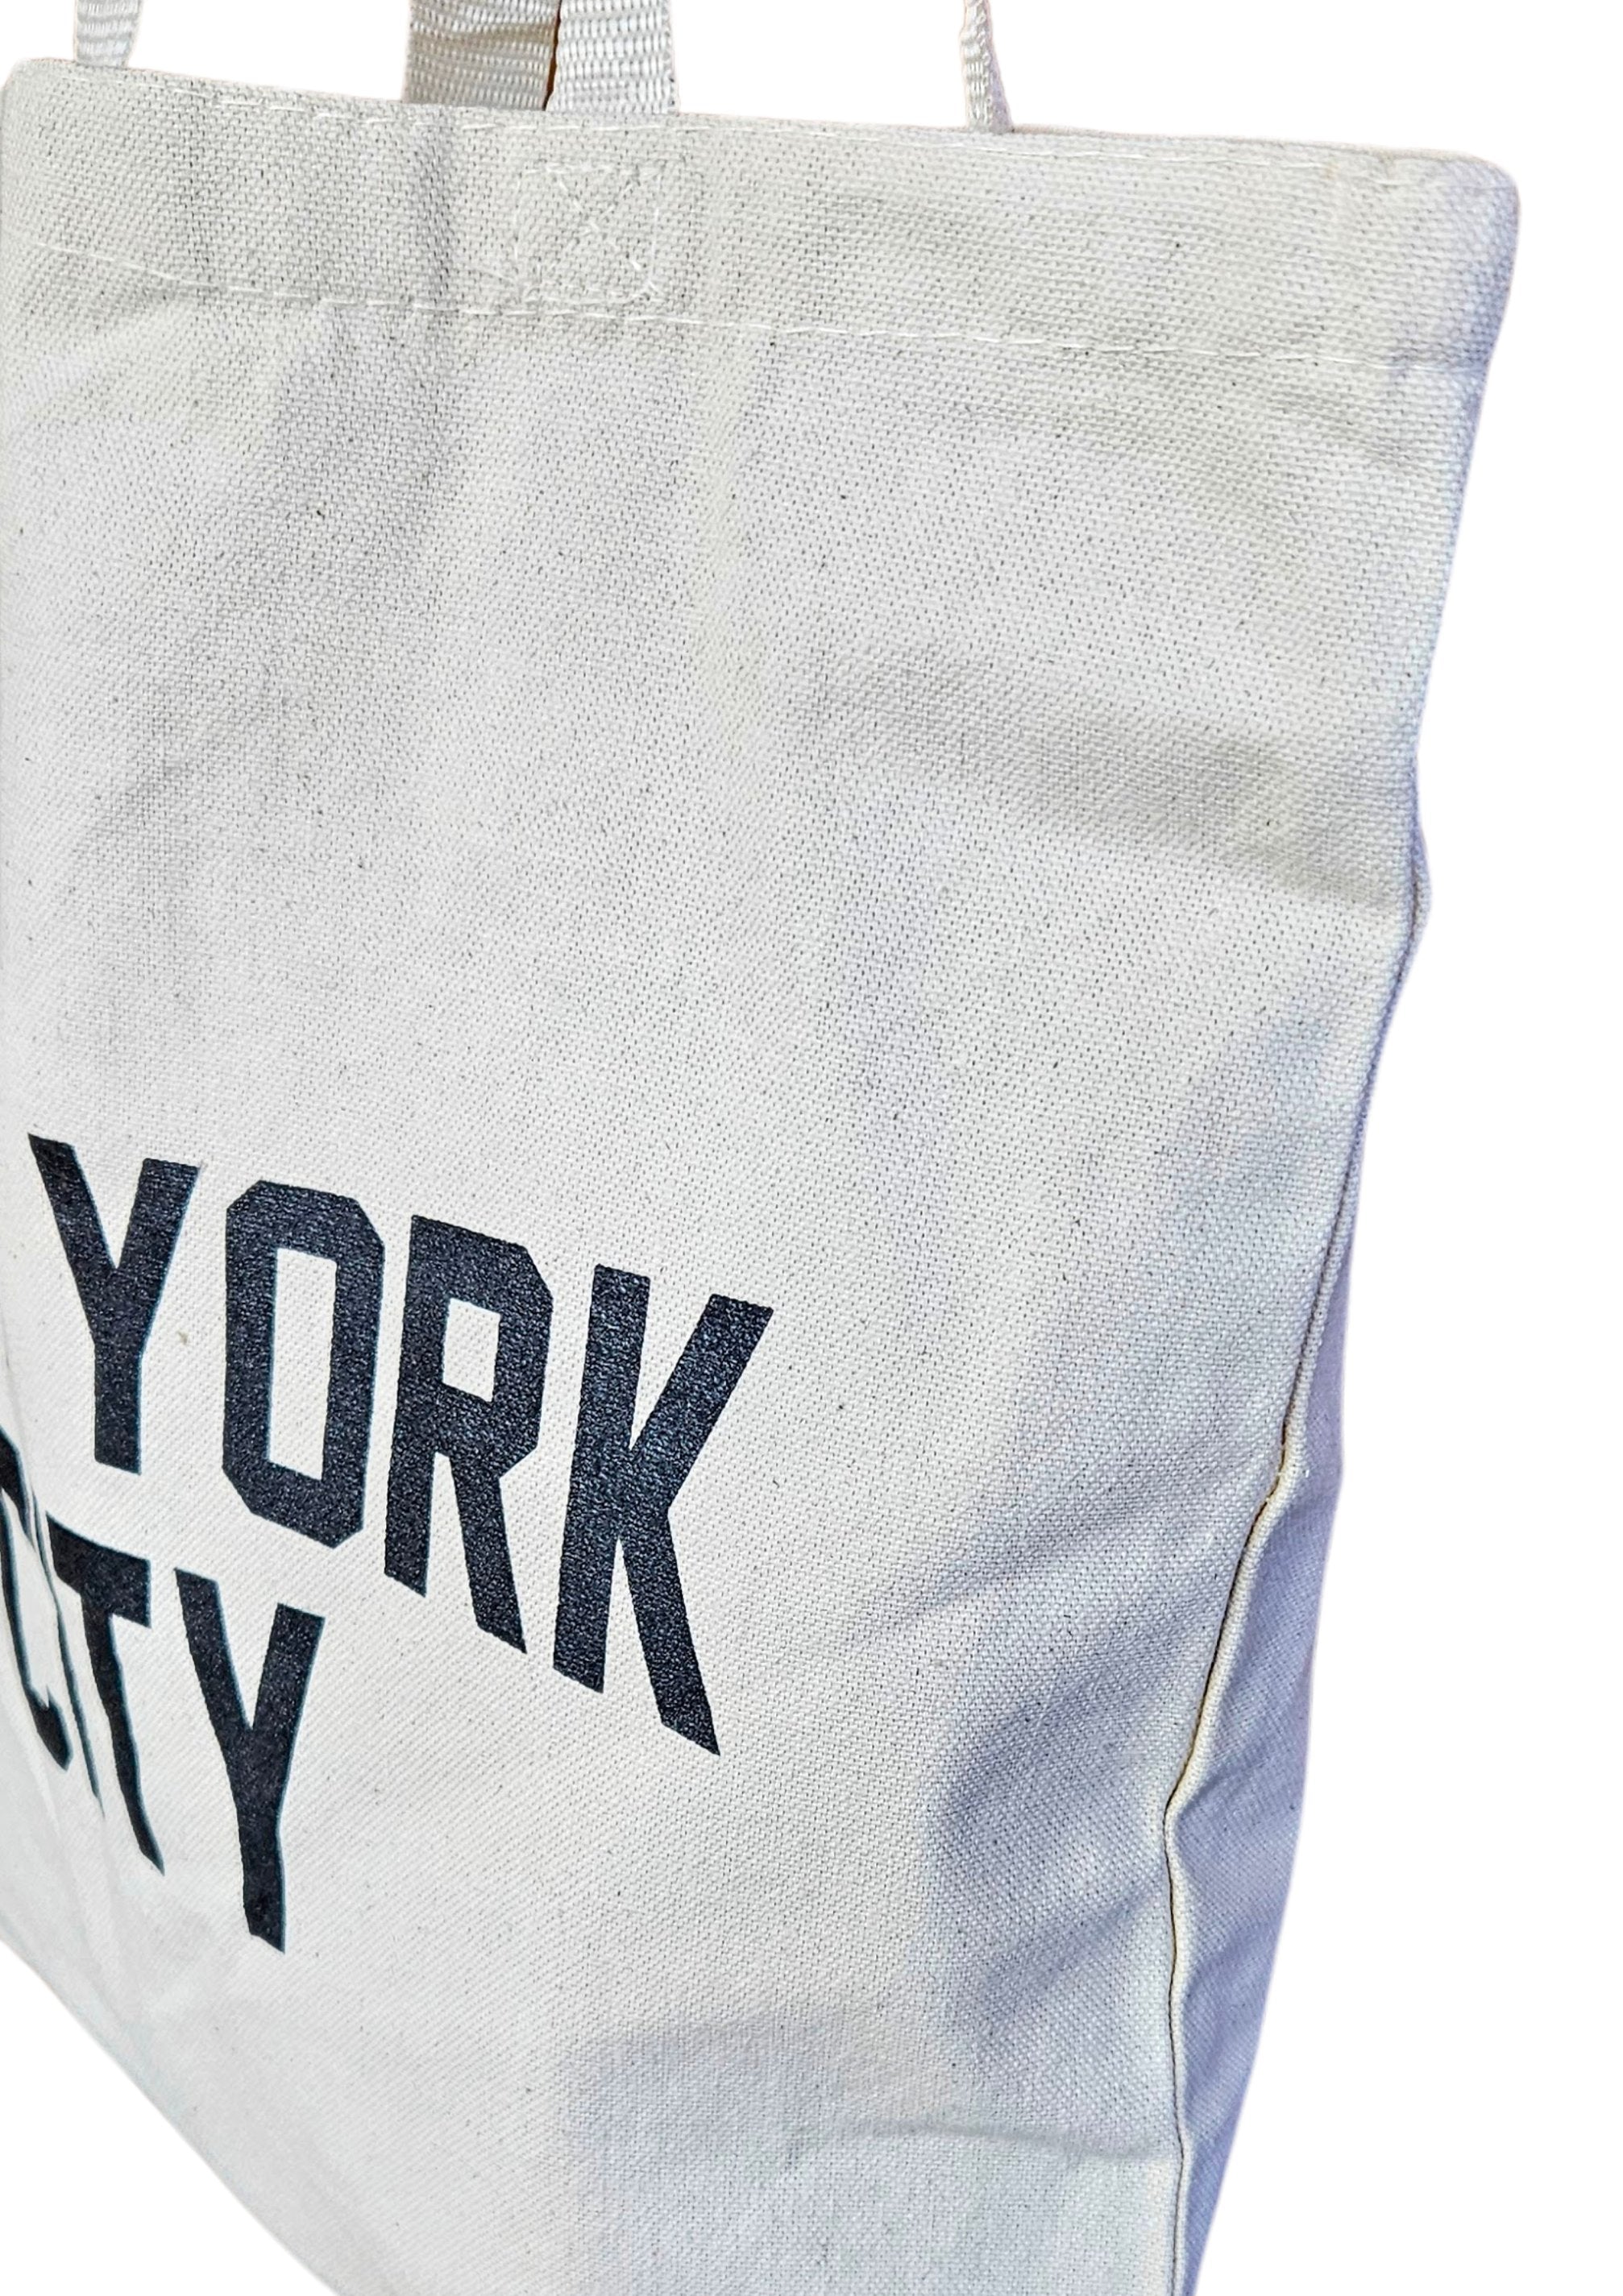 New York City - Natural Handle - Tote Bag Vintage Style Retro NYC Cotton Canvas